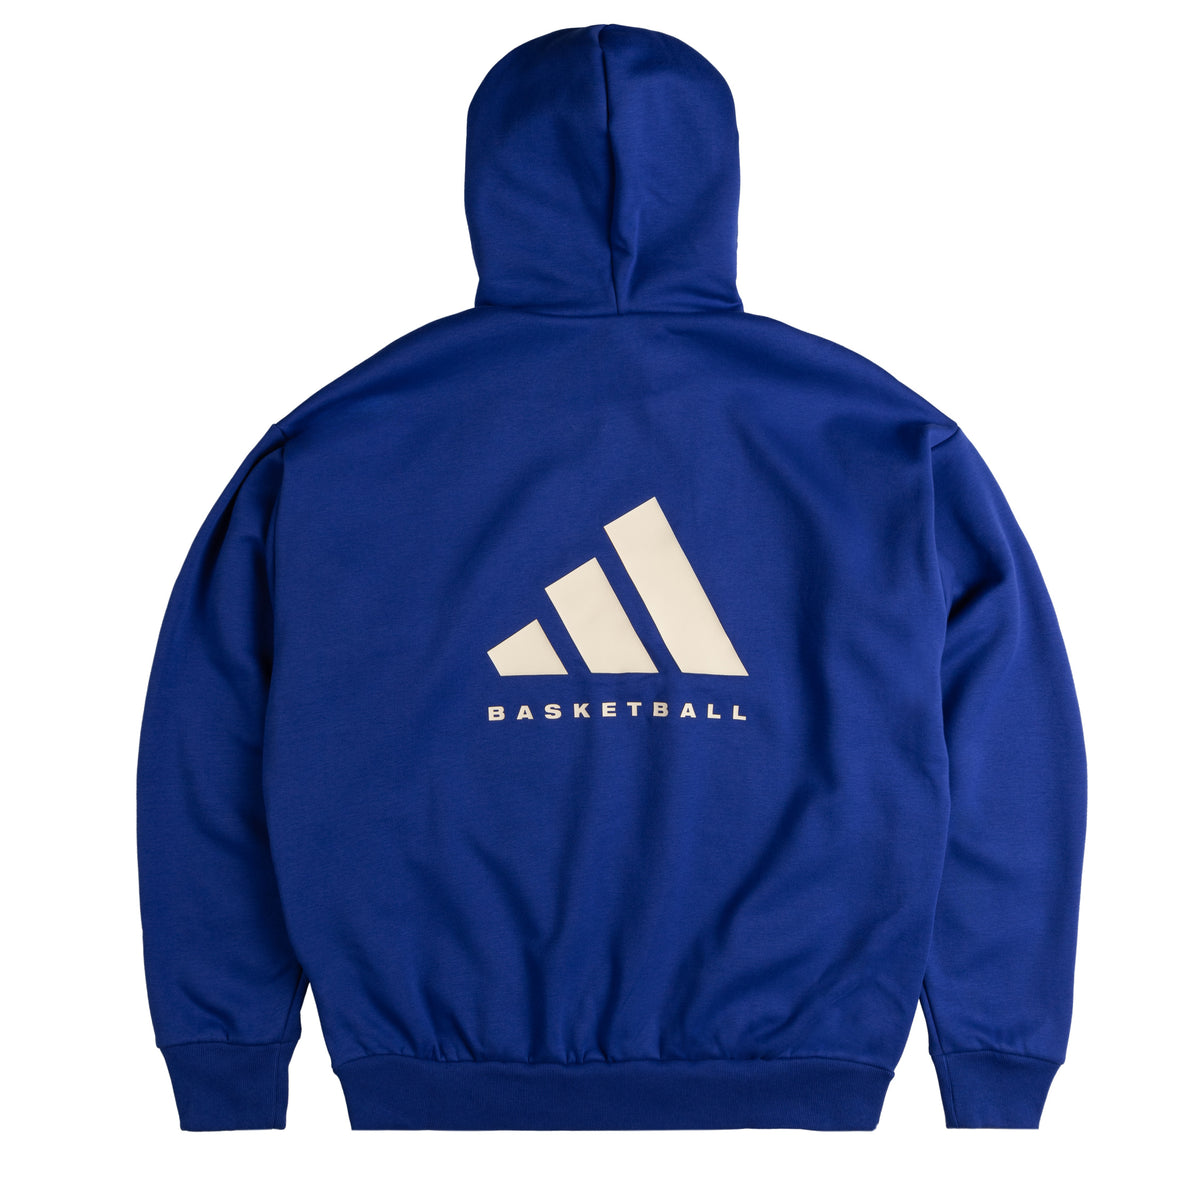 buy now Asphaltgold – Online Fleece Basketball Hoodie Adidas Store! at